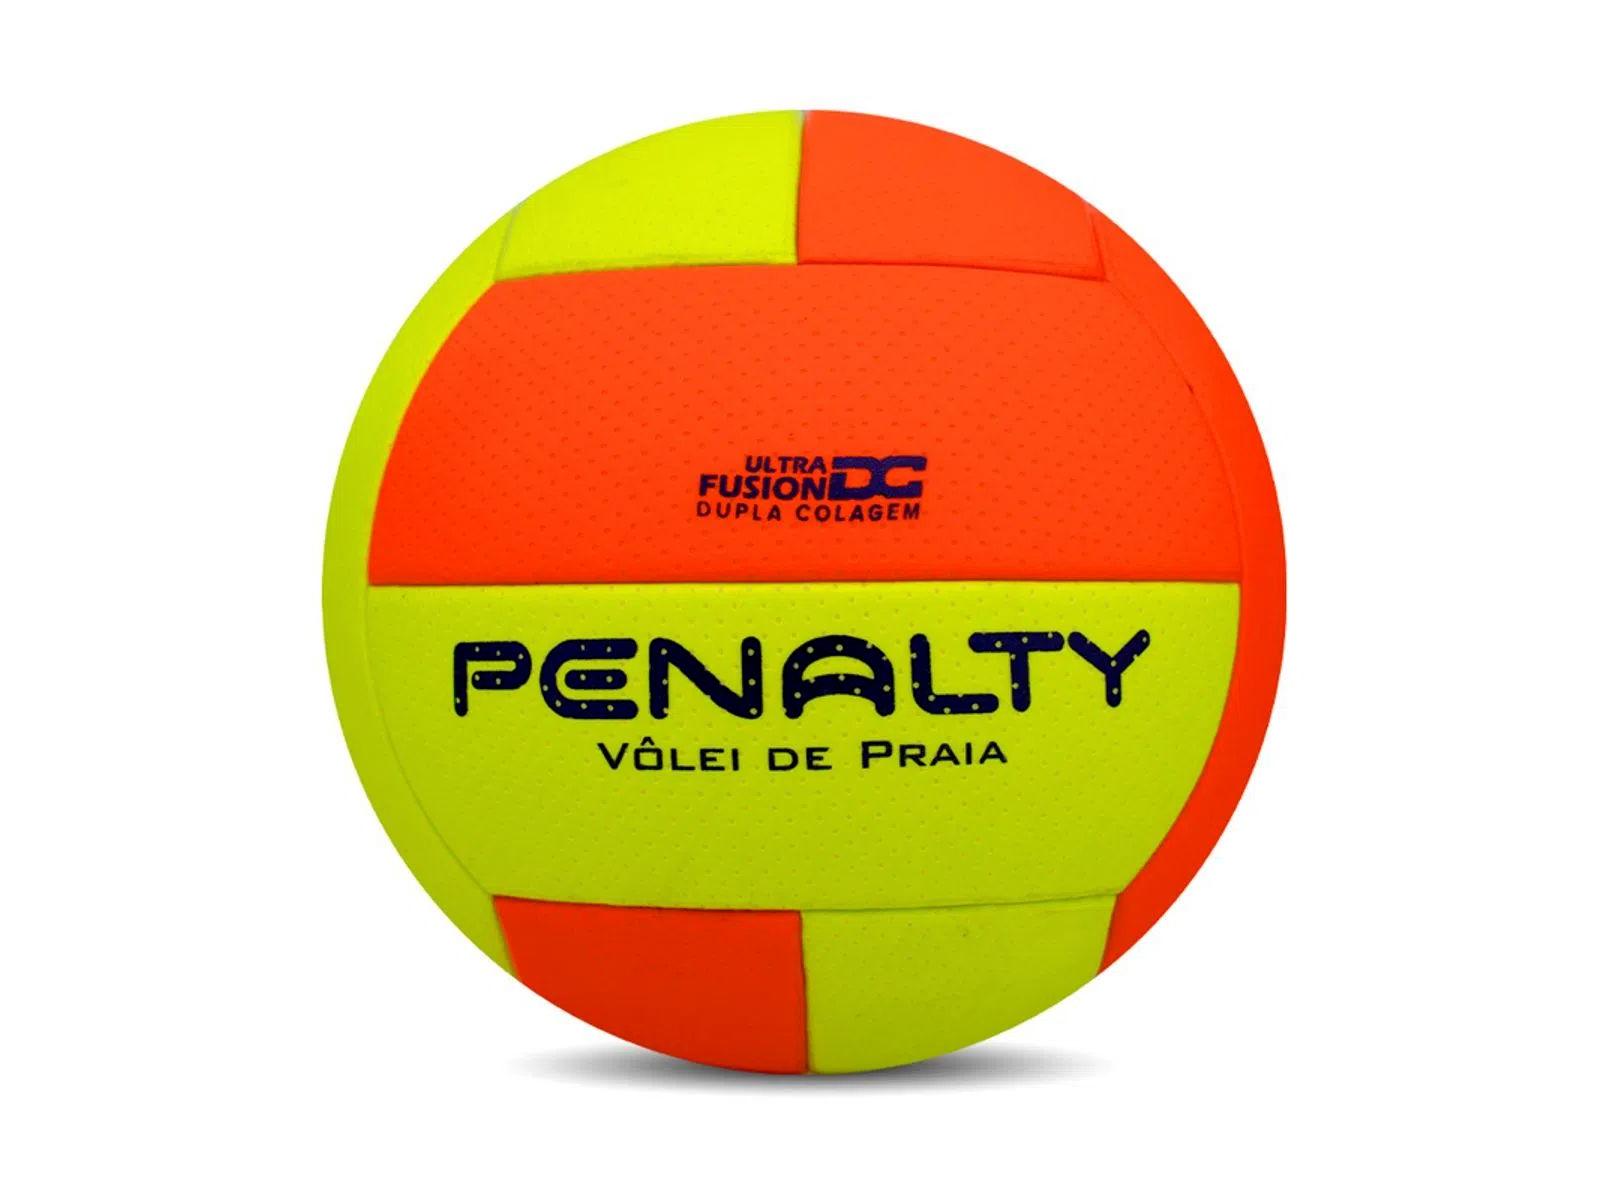 Bola Basquete Penalty Shoot X - Vermelho/Branco - Bola Basquete Penalty  Shoot X - Penalty